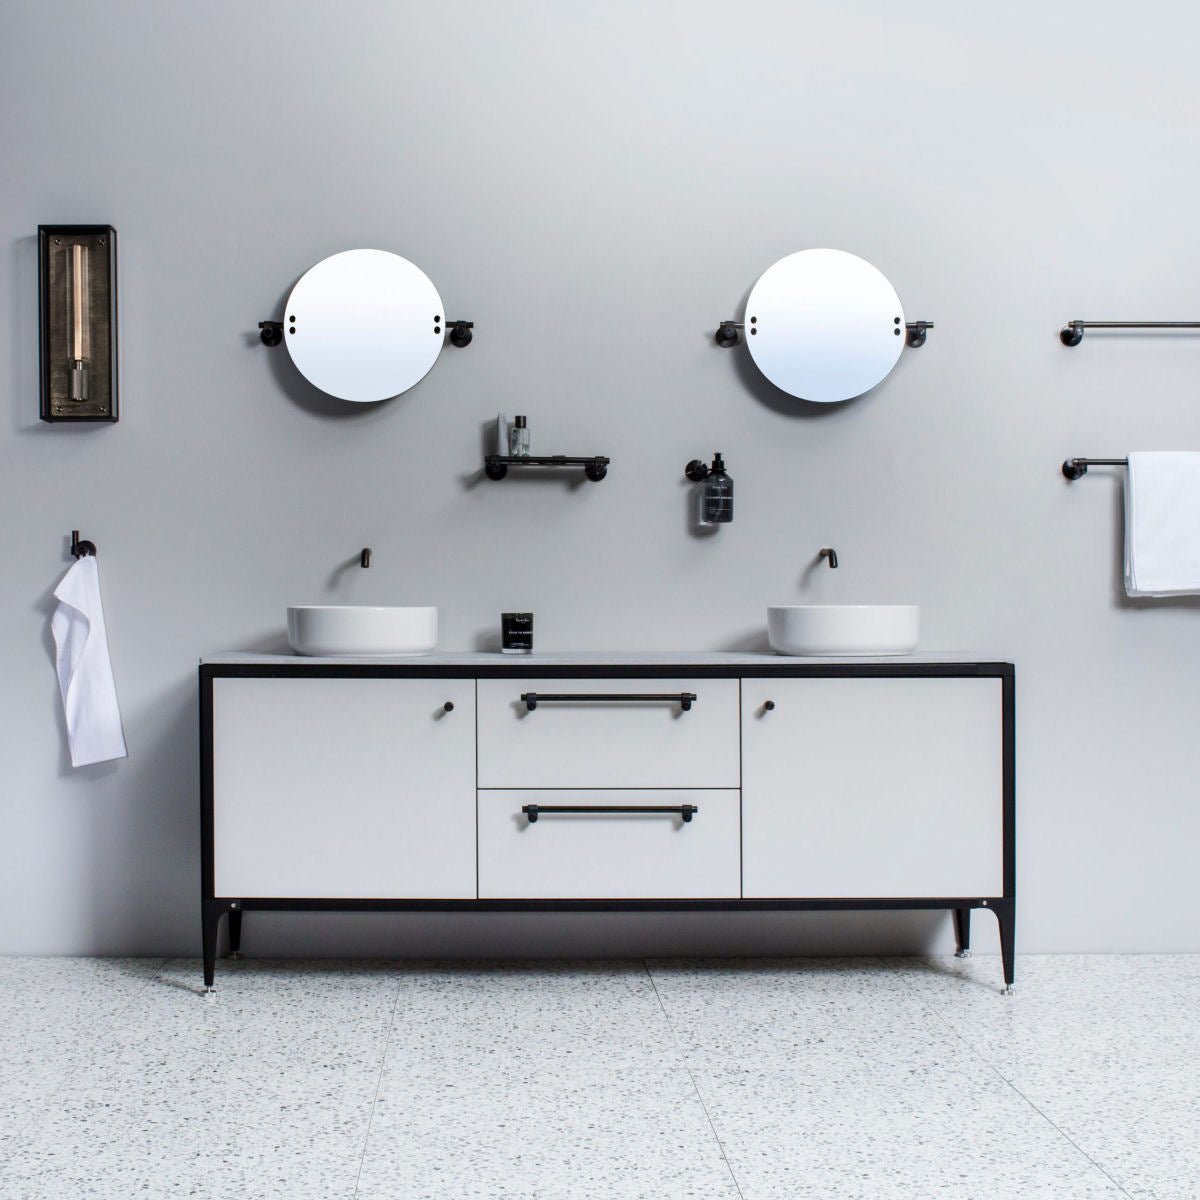 Liquid Soap Industrial Holder / Welders Black - |VESIMI Design| Luxury and Rustic bathrooms online